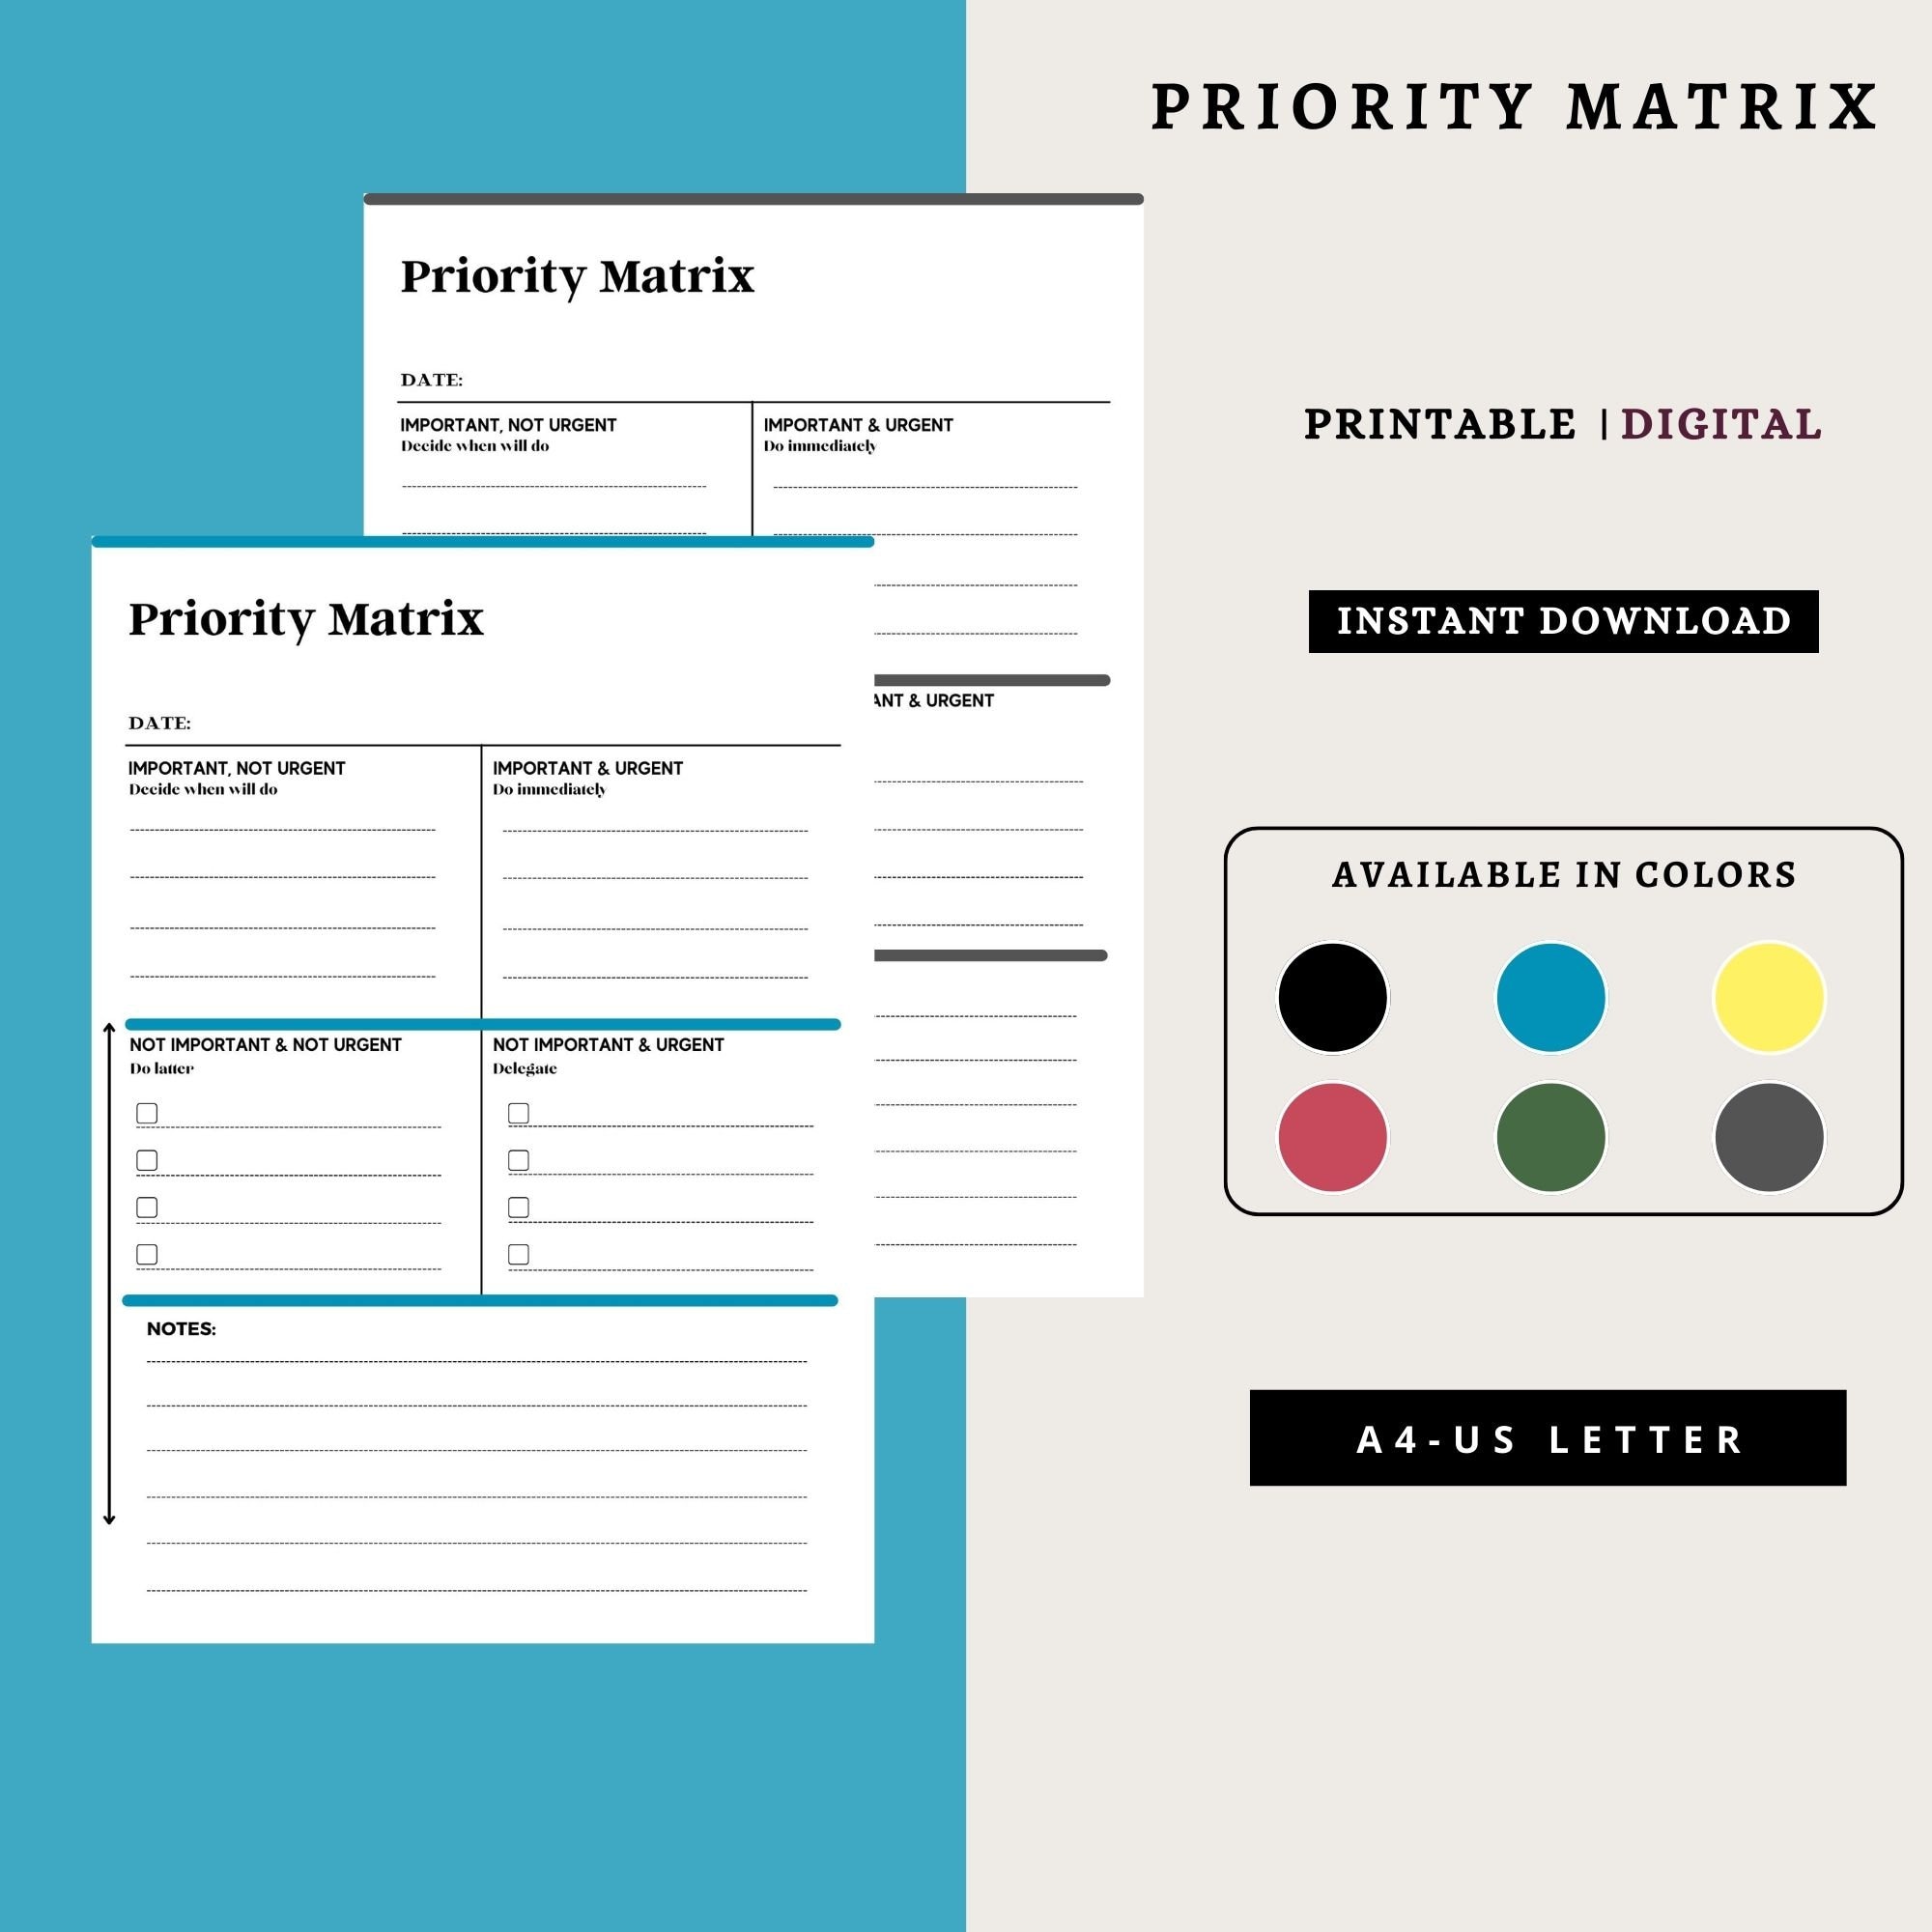 Priority Matrix - Google Workspace Marketplace